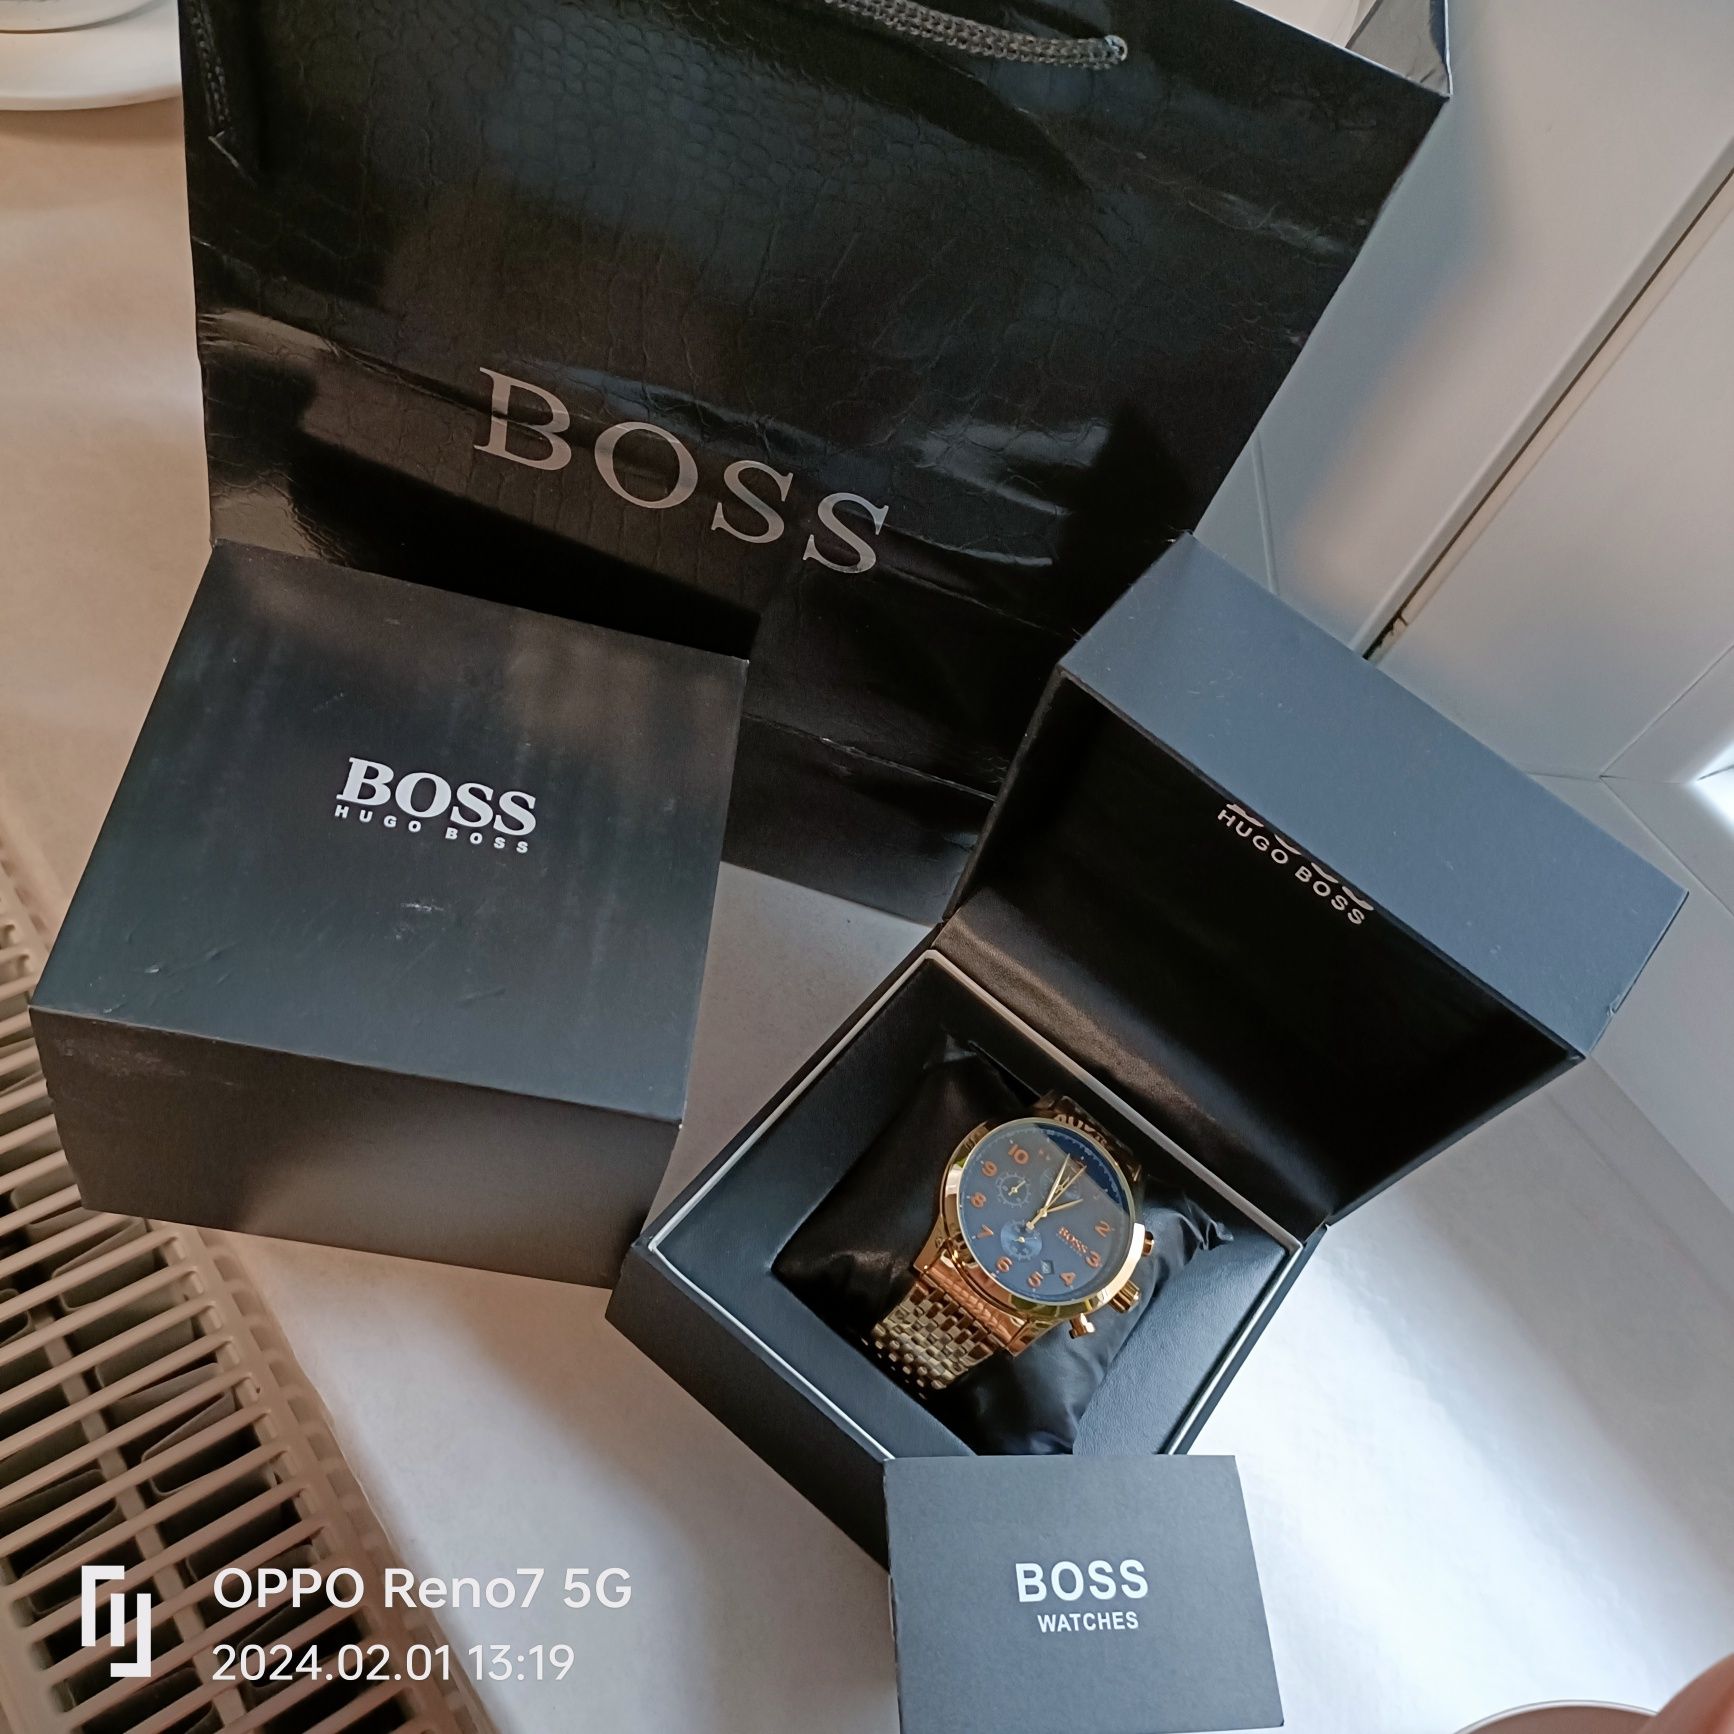 Zegarek Hugo Boss